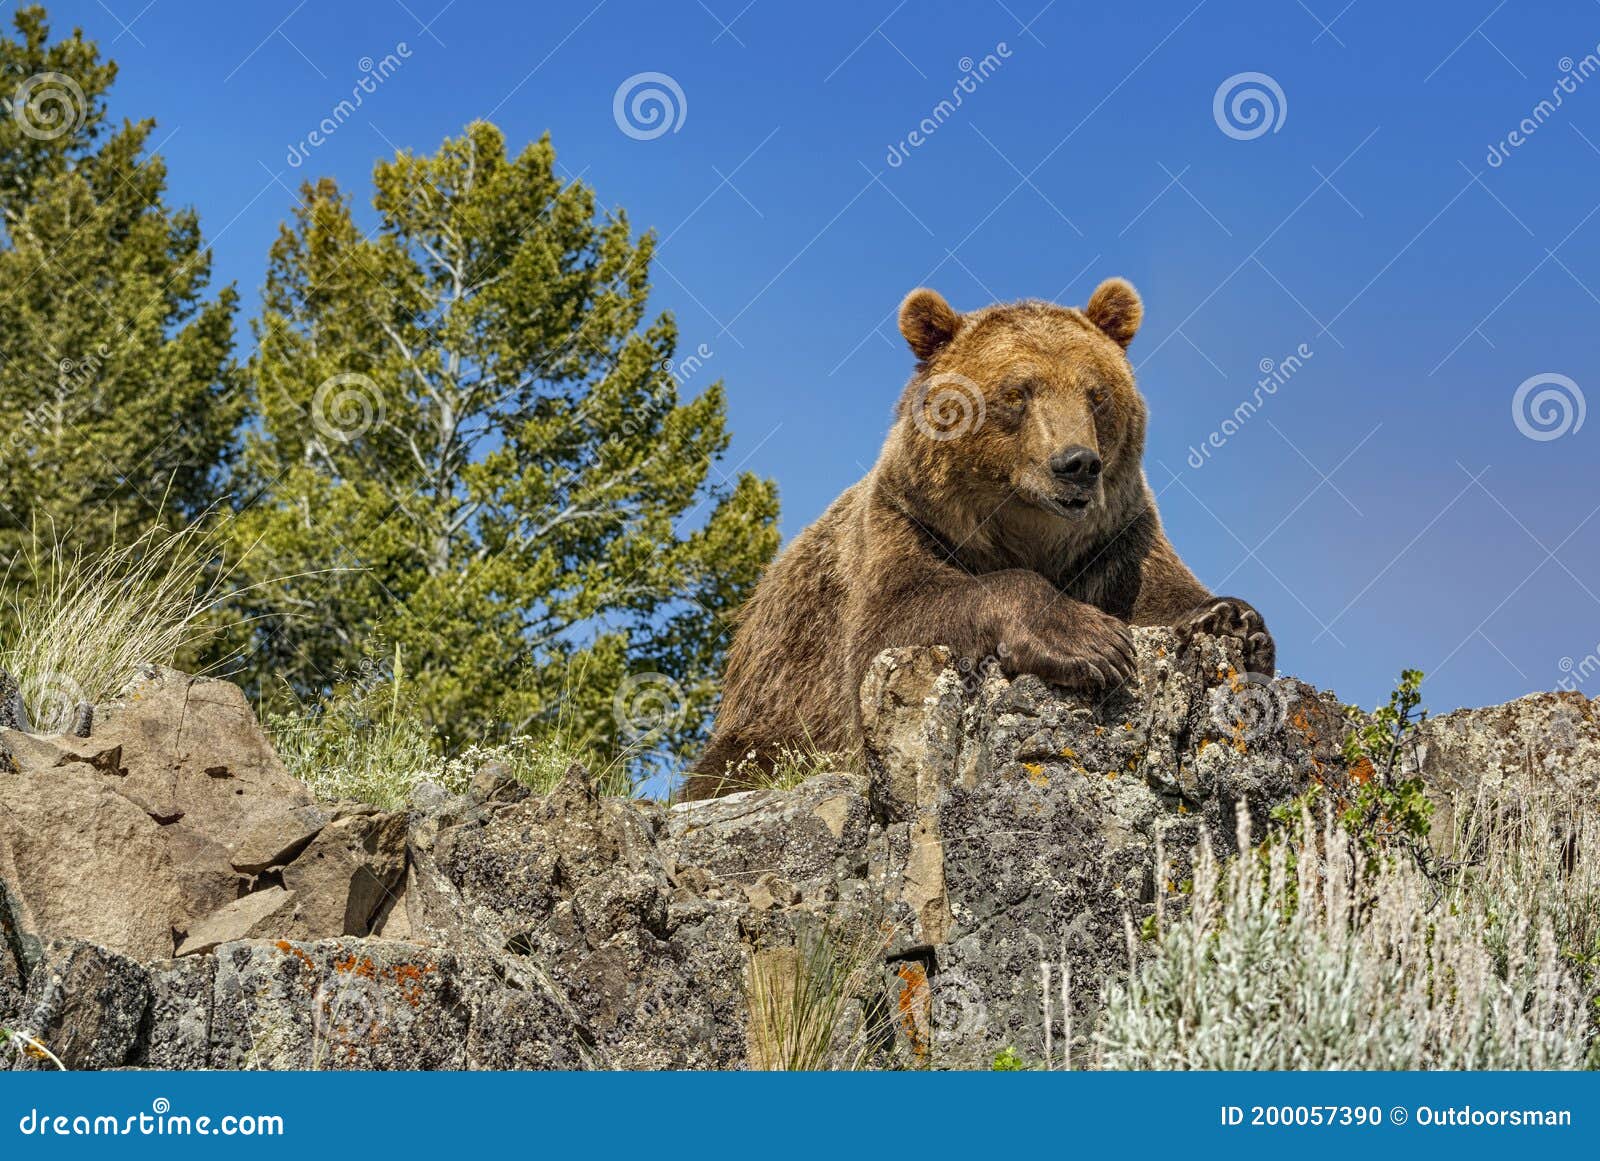 grizzly bear on montana ridge